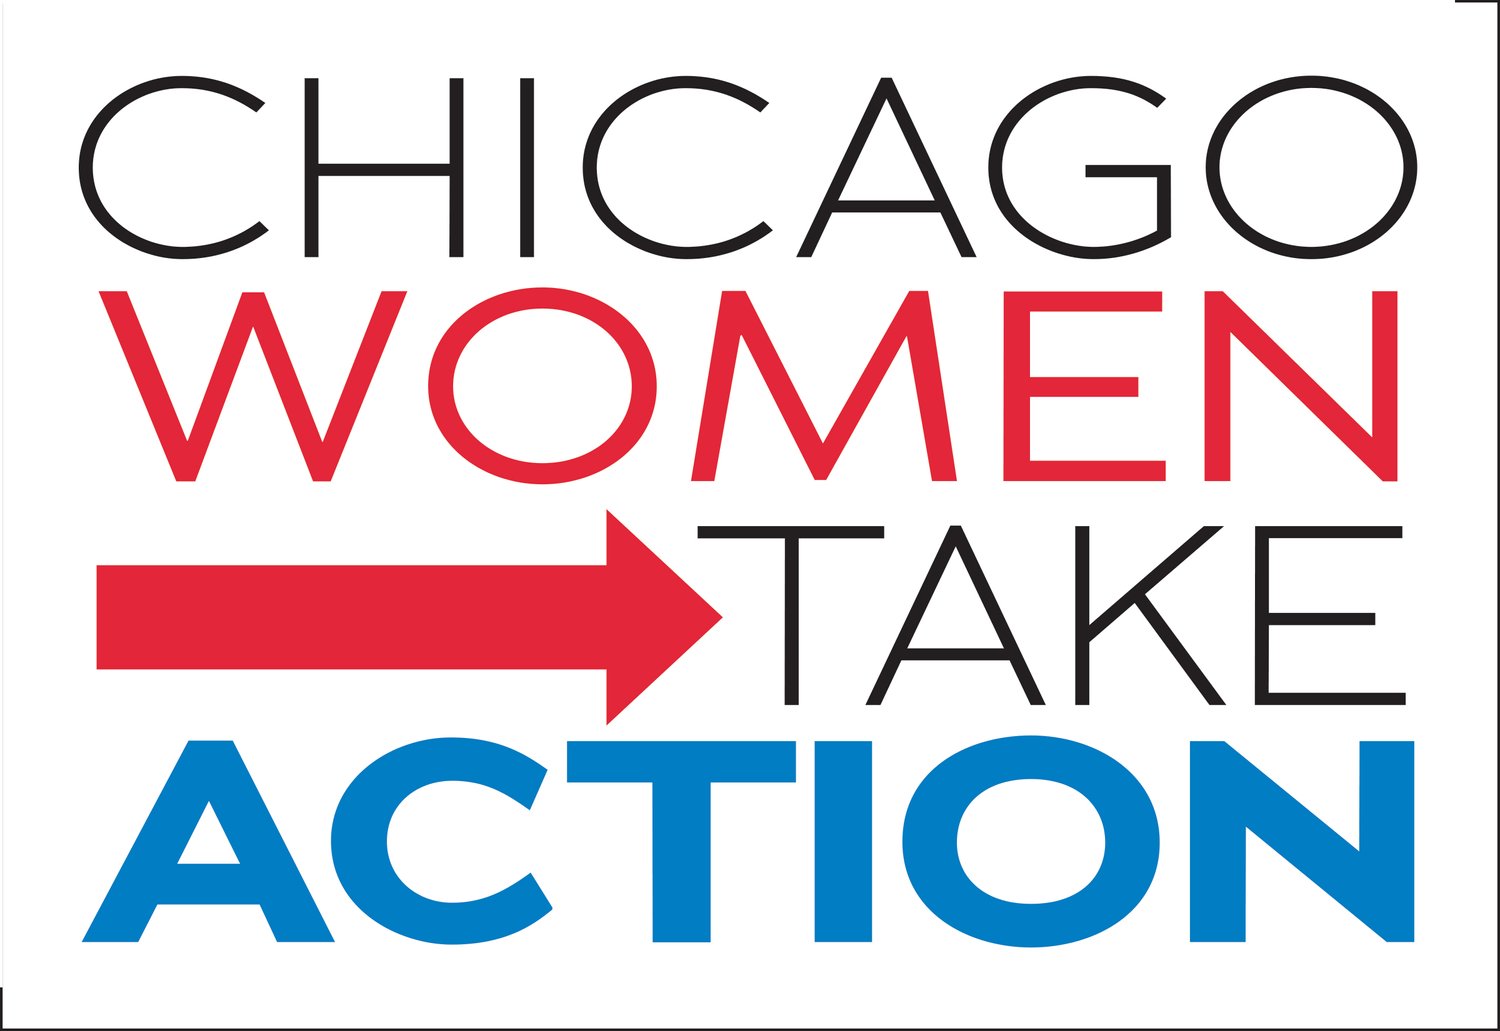 Chicago Women Take Action